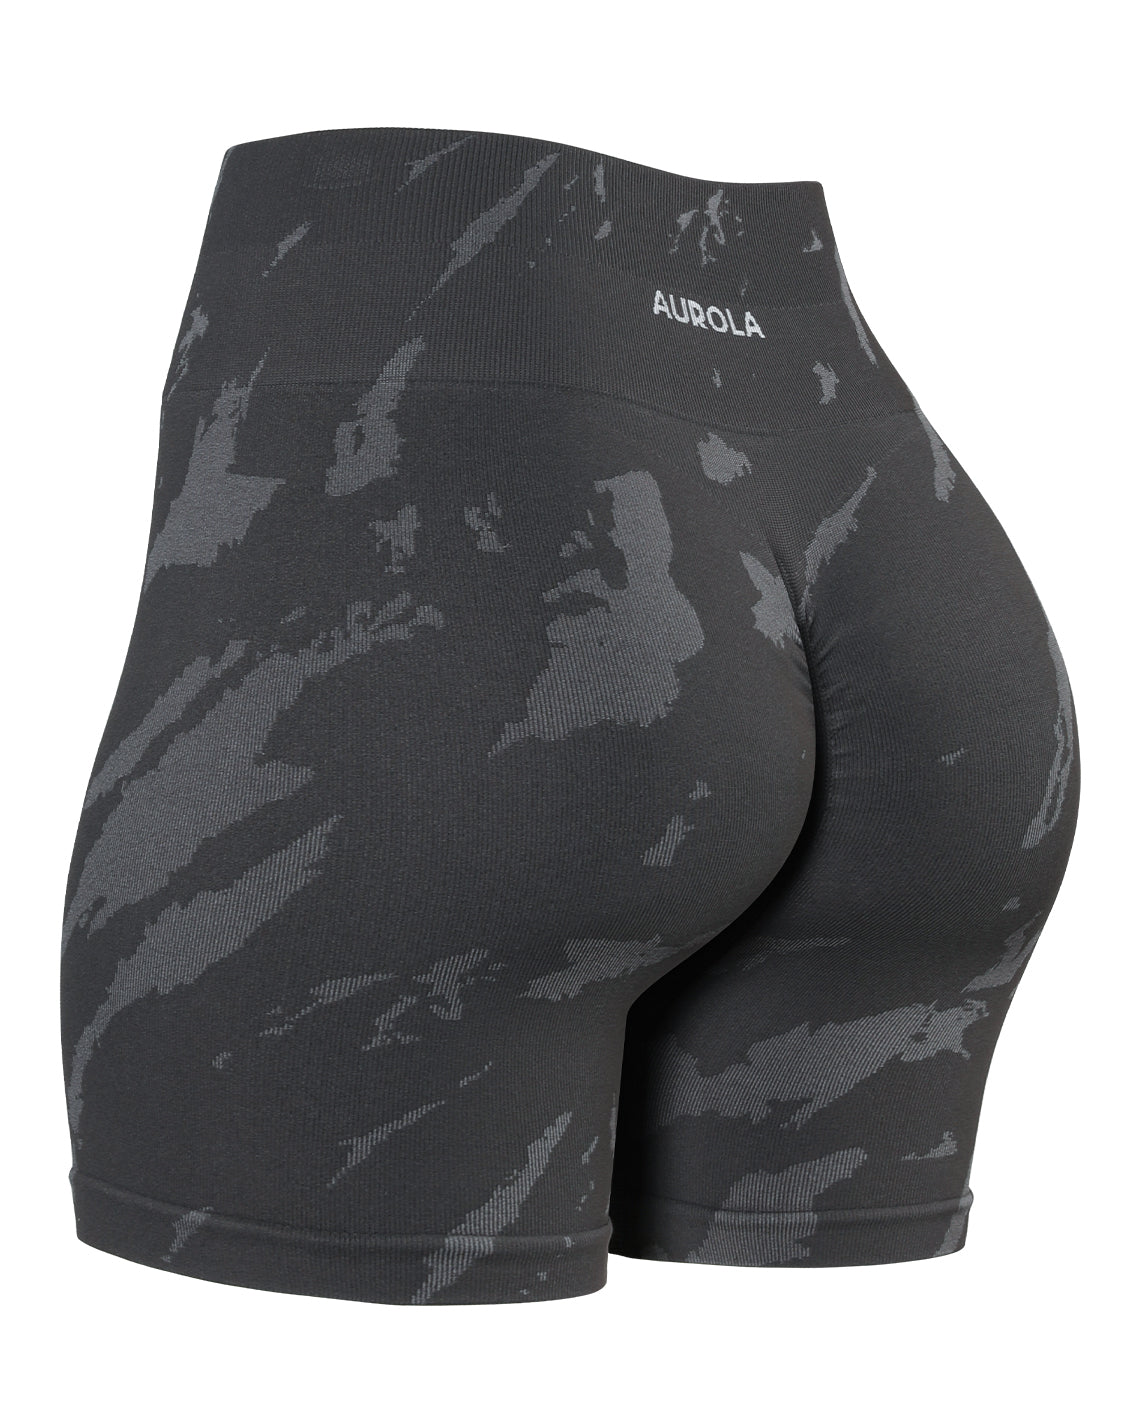 Aurola shorts bundle for Sale in Mesa, AZ - OfferUp